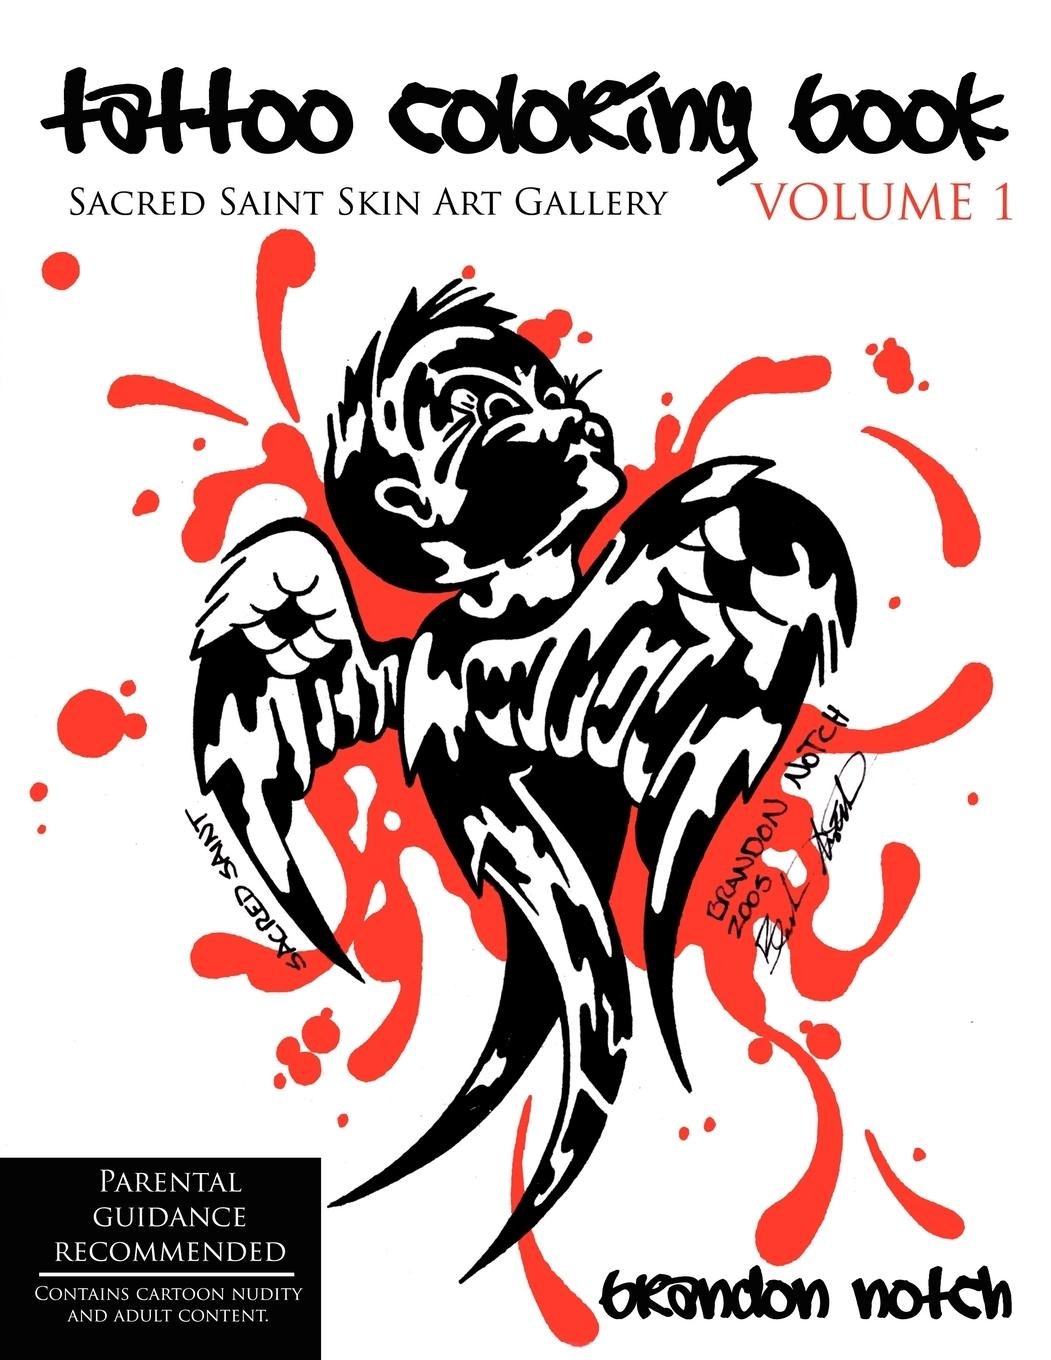 Tattoo Coloring Book Volume 1: Sacred Saint Skin Art Gallery - Notch, Brandon